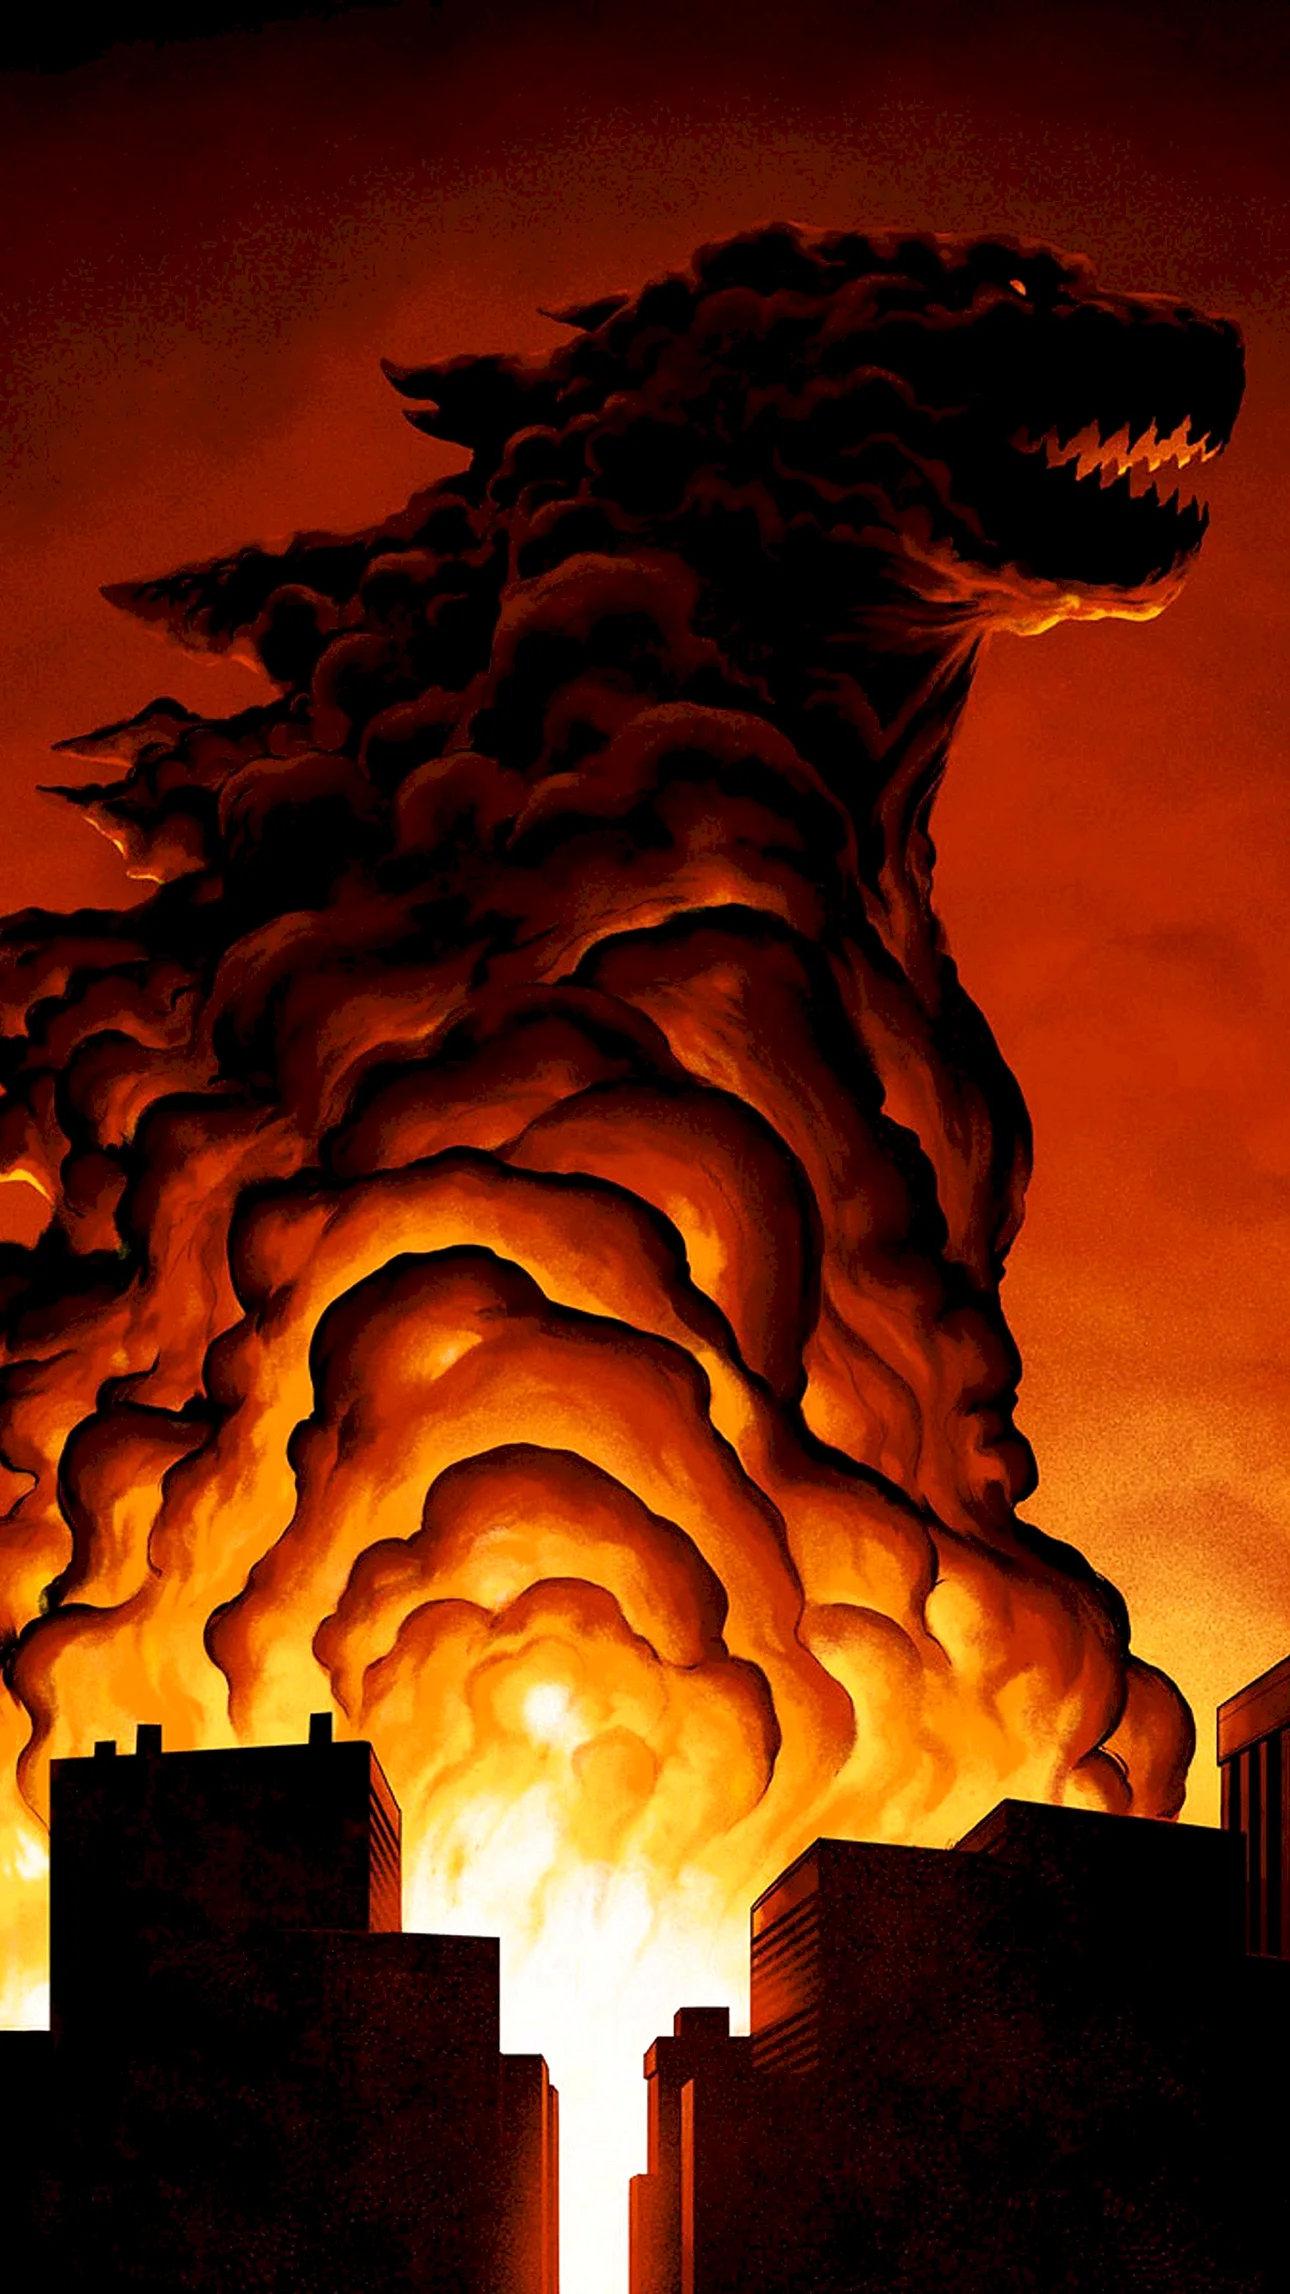 Godzilla 2014 Wallpaper For iPhone